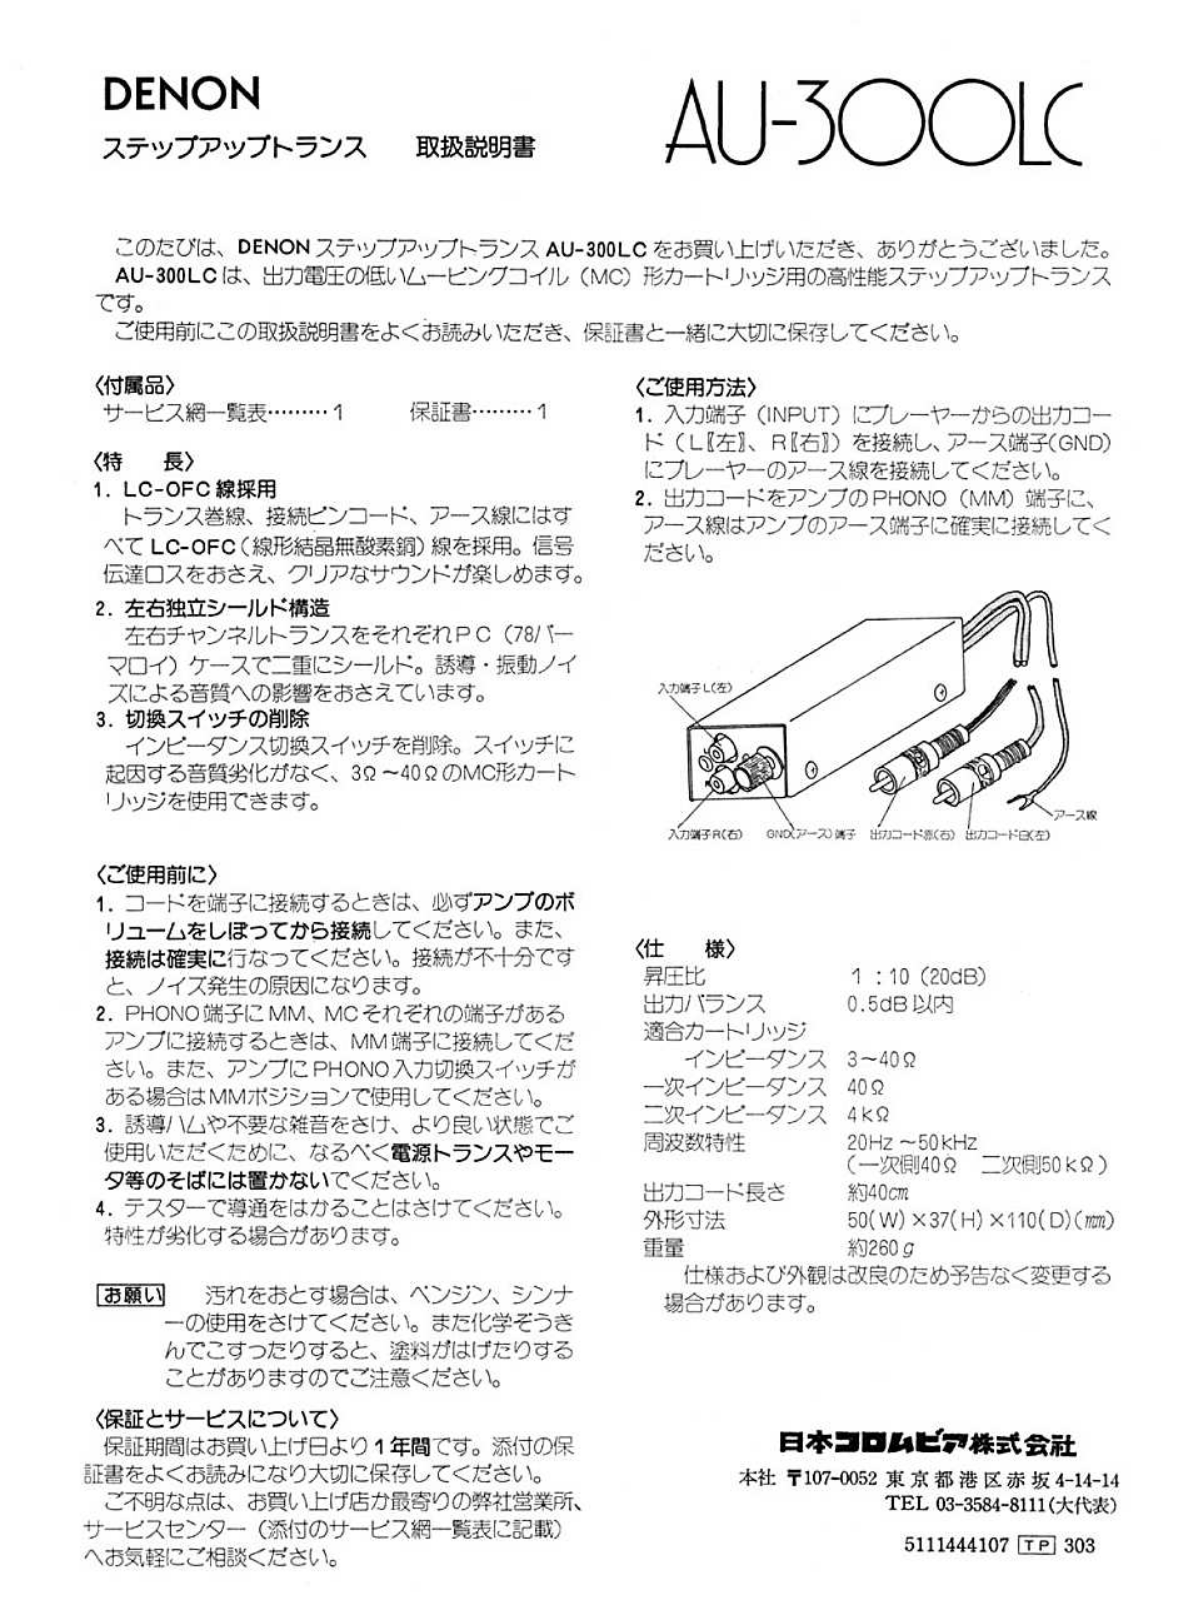 Denon AU-300LC Owner's Manual